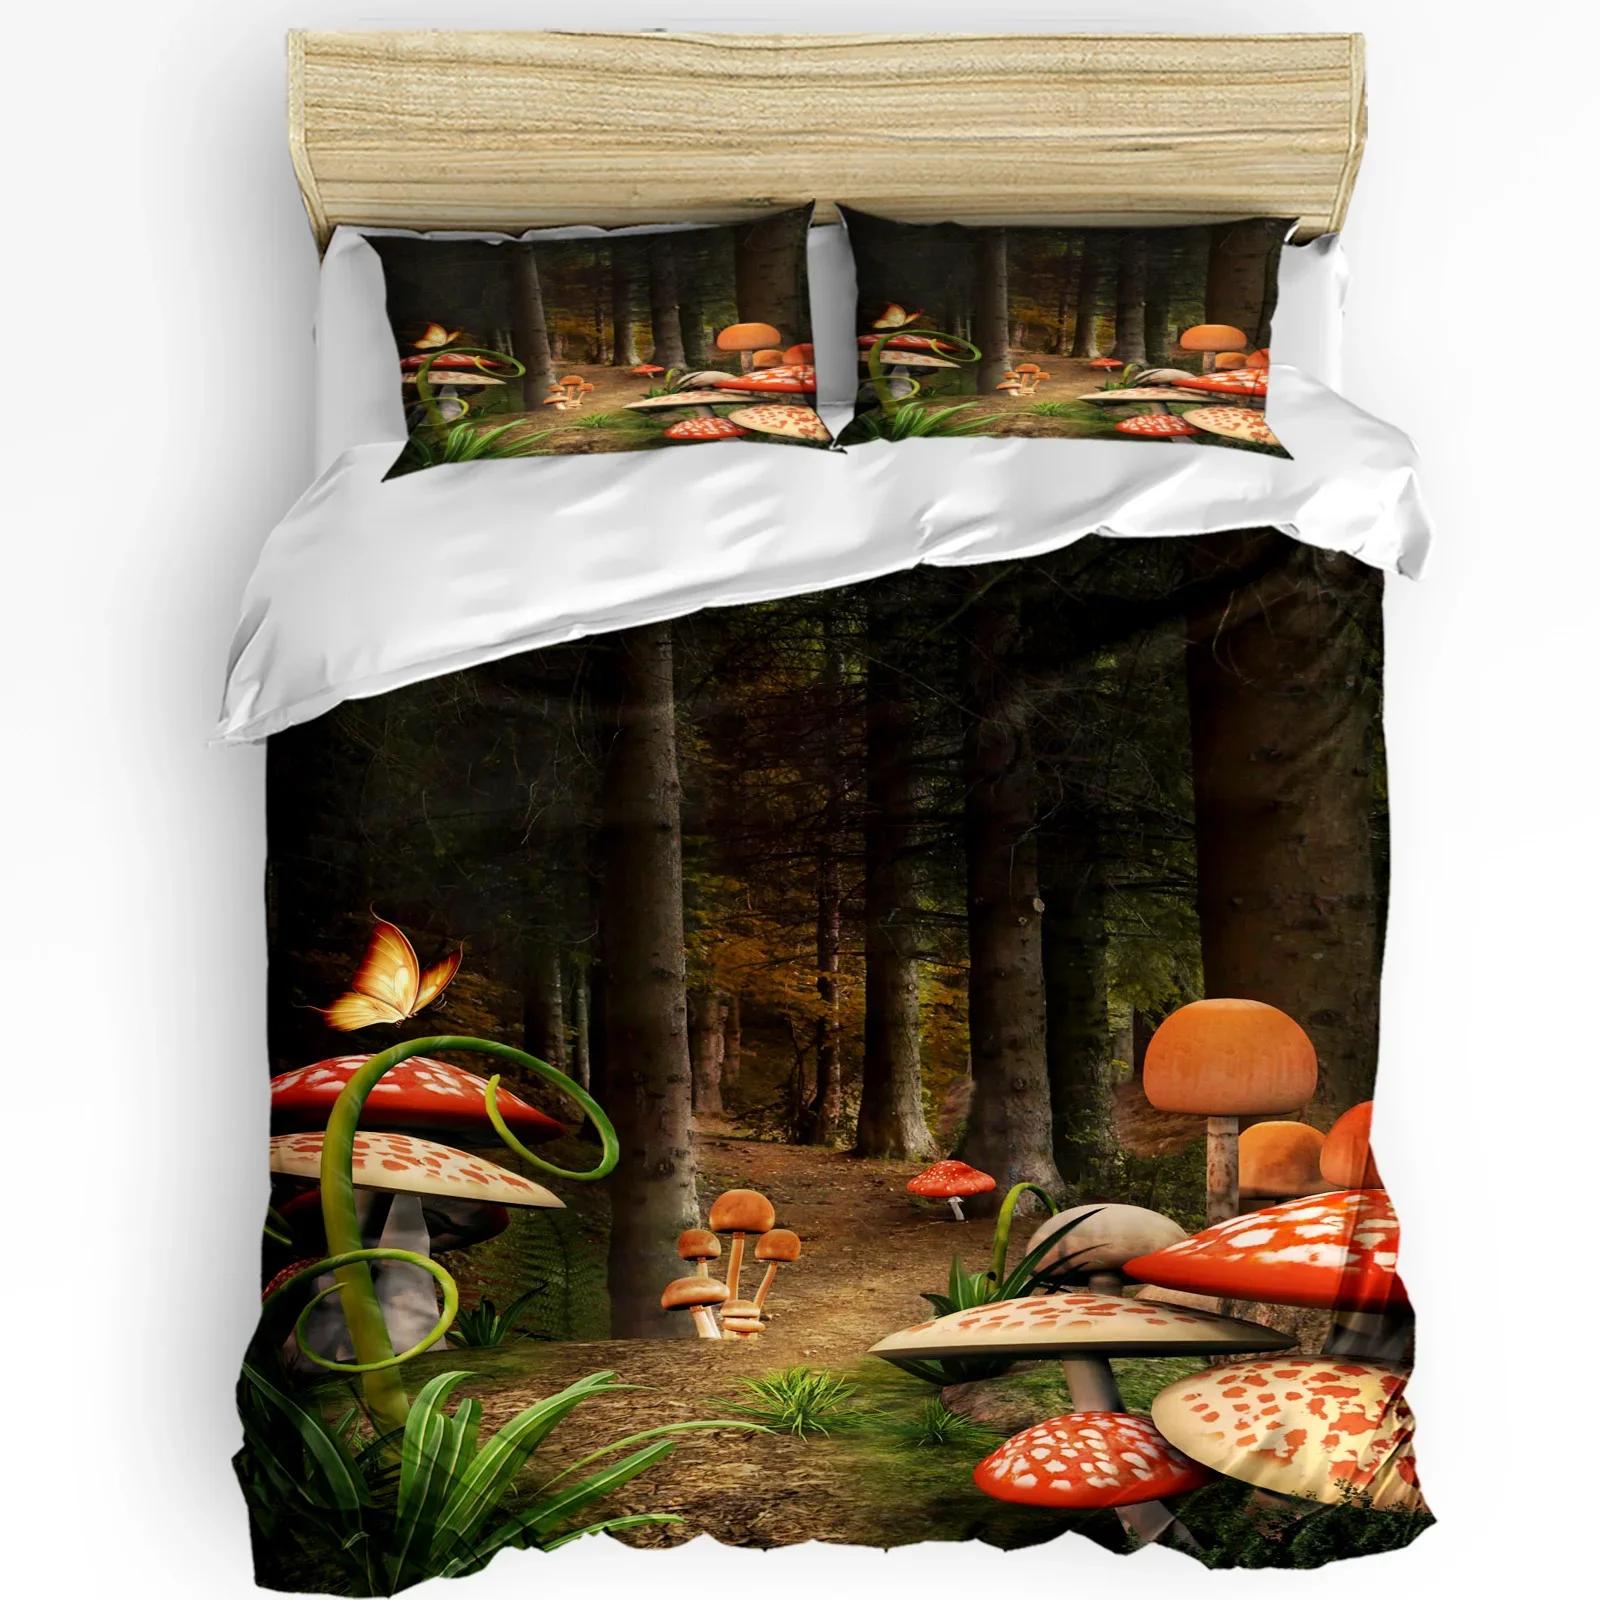 Mushroom Forest Printed Comfort Duvet Cover Pillow Case Home Textile Quilt Cover Boy Kid Teen Girl Luxury 3pcs Beddi